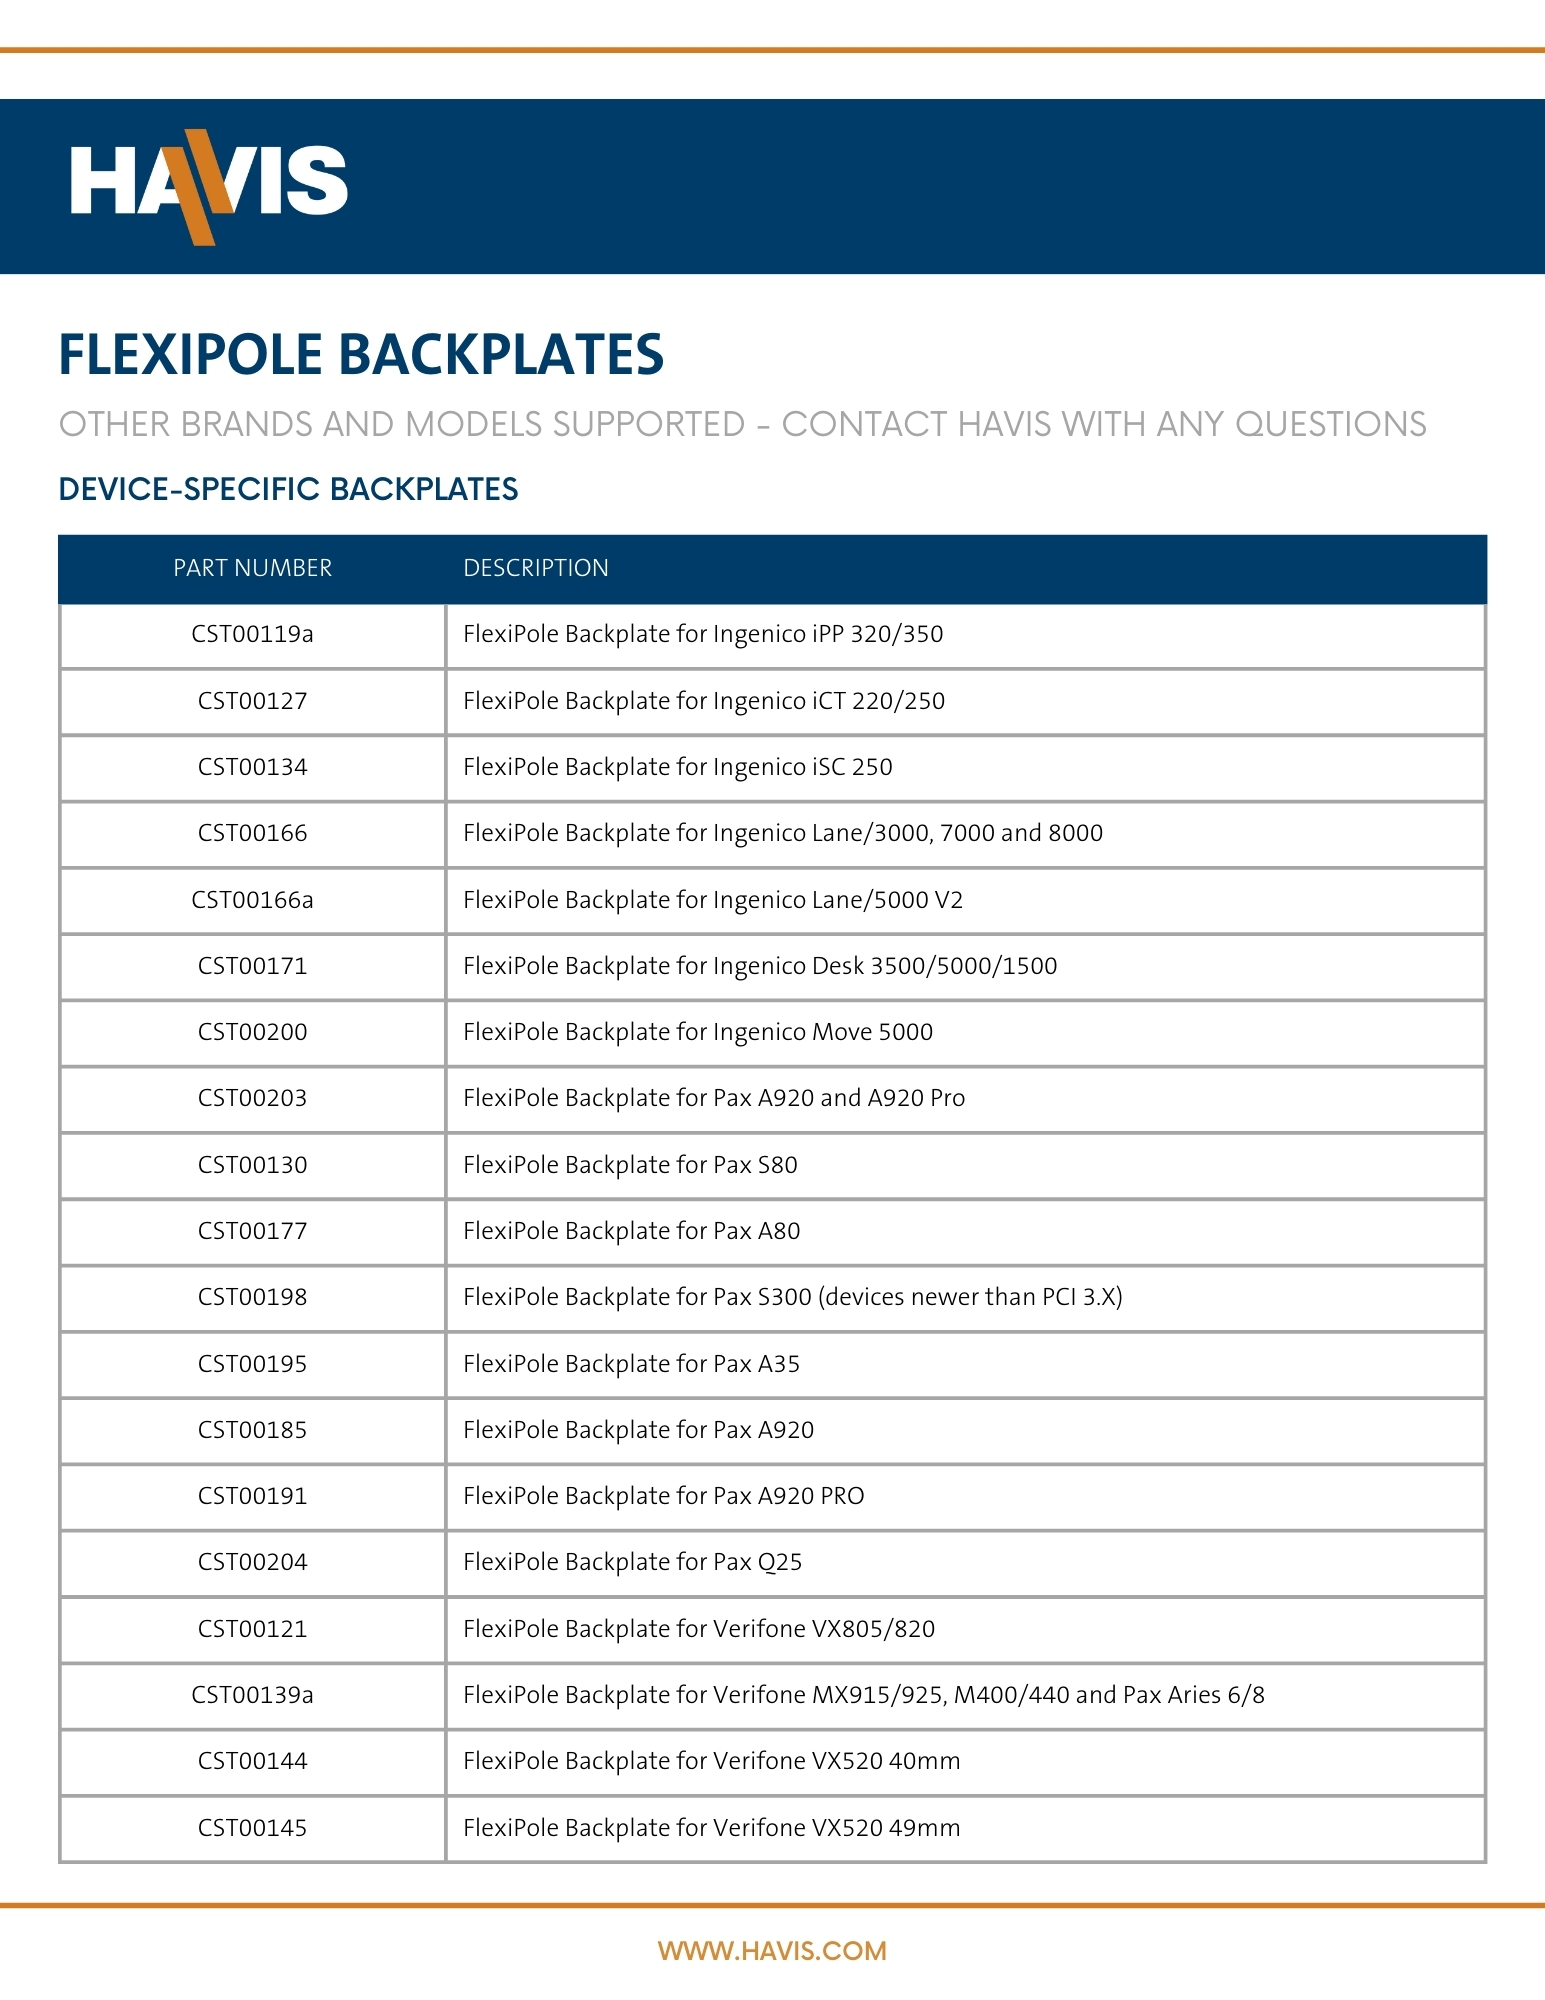 FlexiPole Backplates Product List